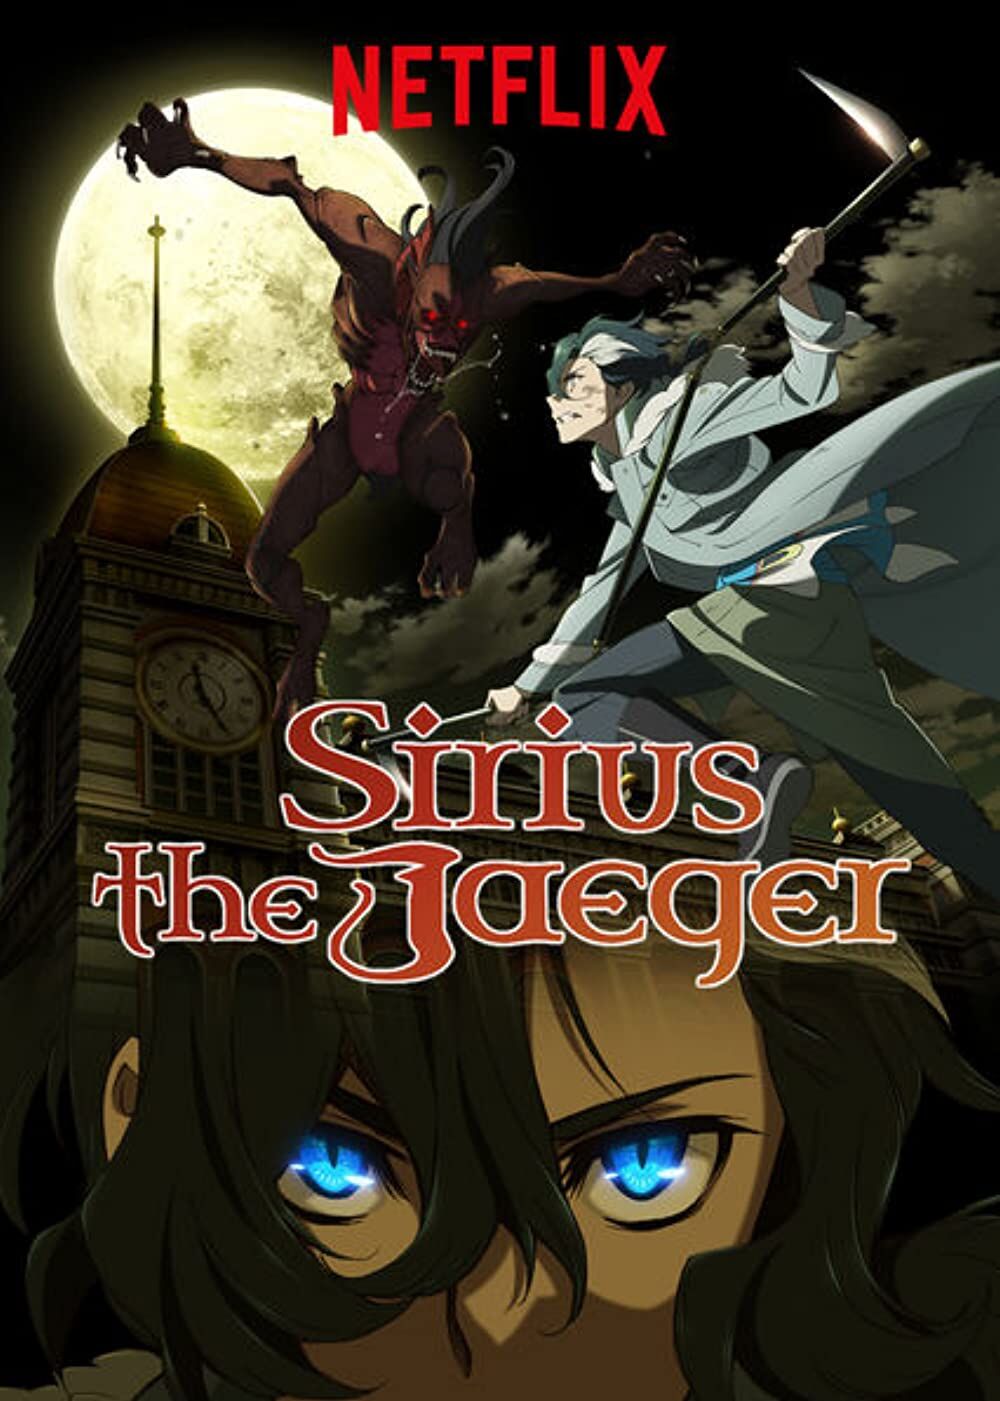 Sirius the Jaeger [English Sub] - Mikhail vs Yevgraf